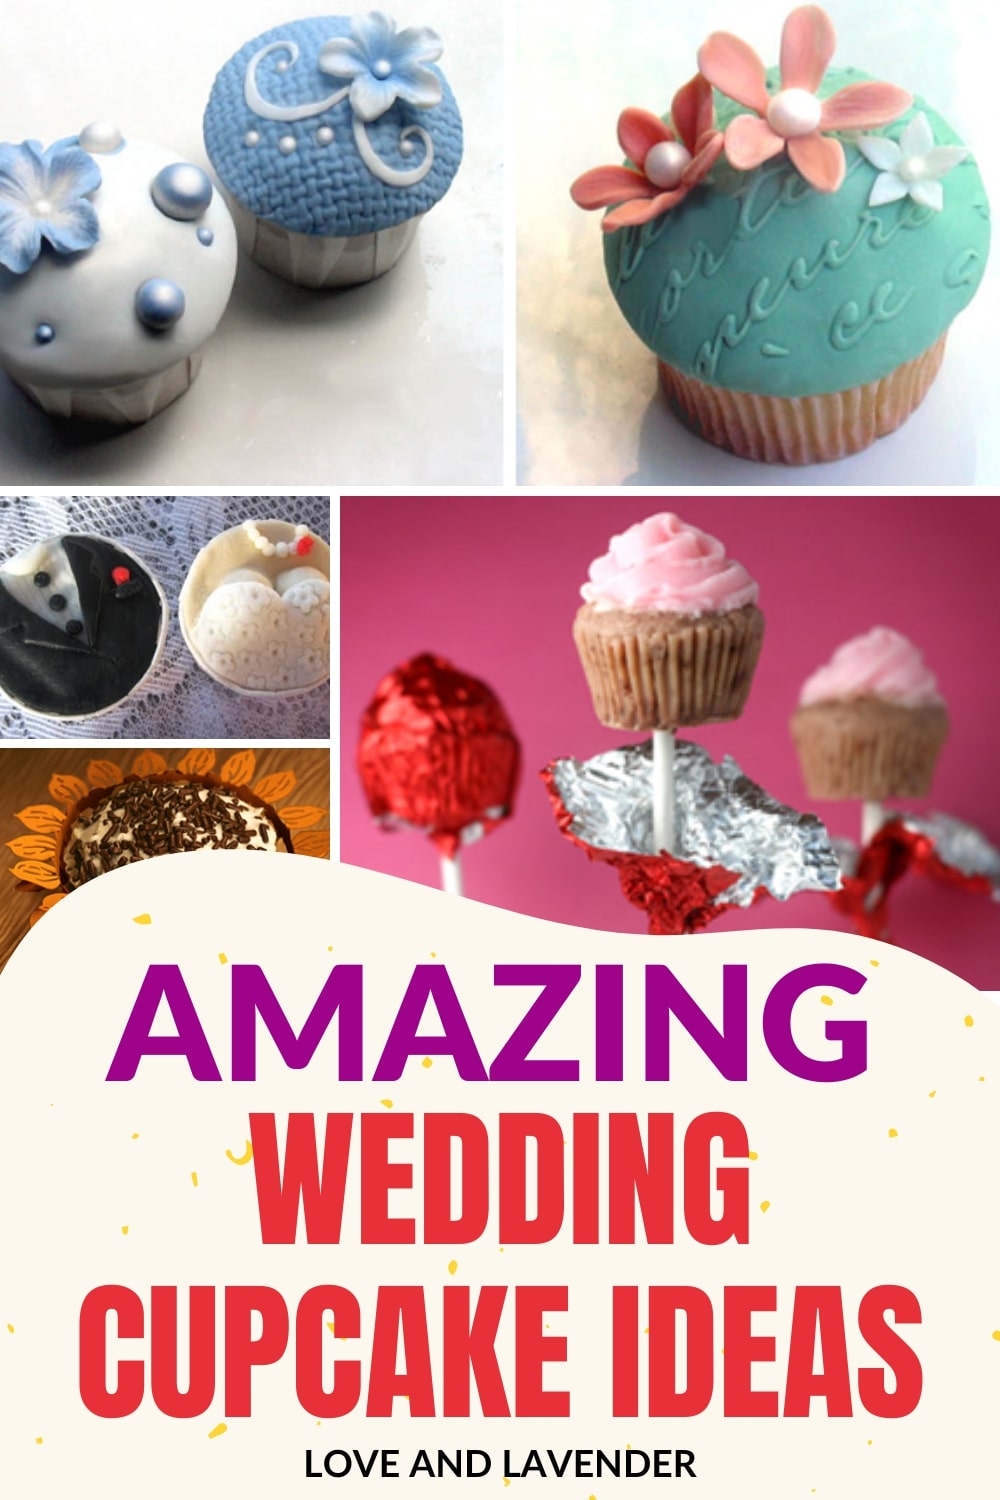 7 Amazing Wedding Cupcake Ideas